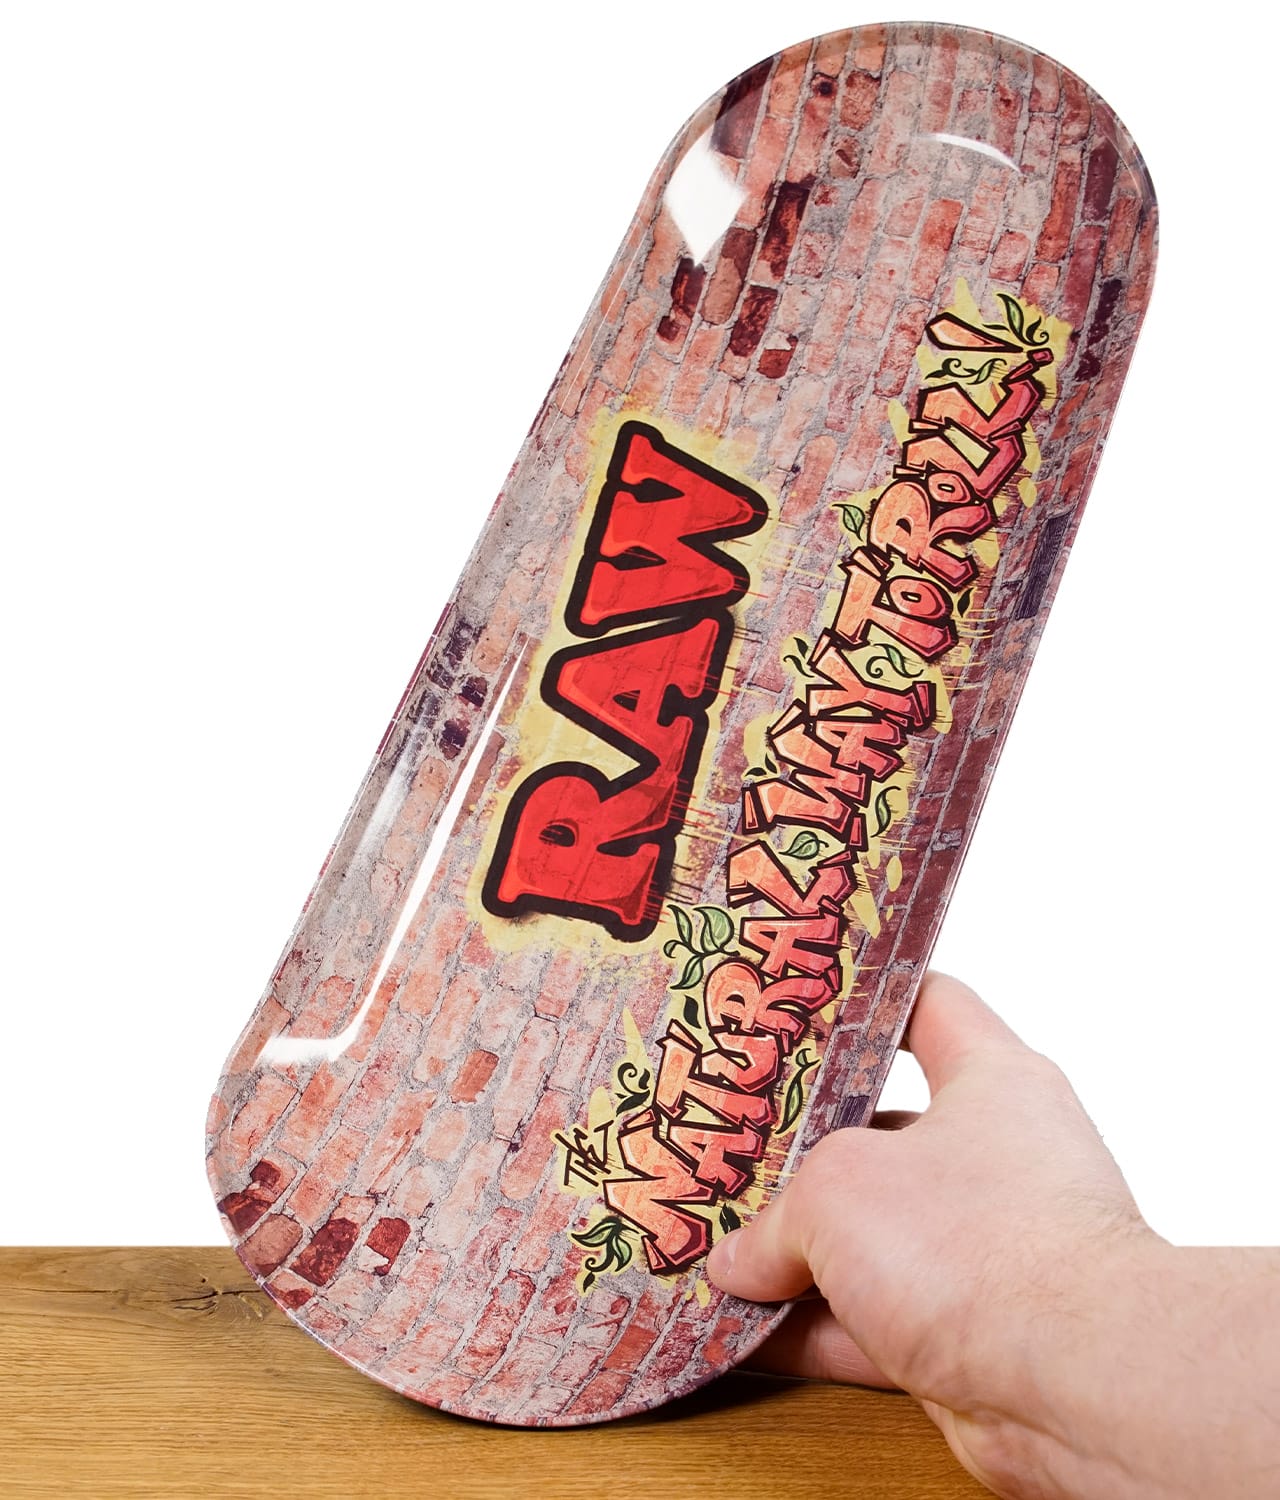 RAW Rolling Tray Metal Skate Deck Graffiti 3